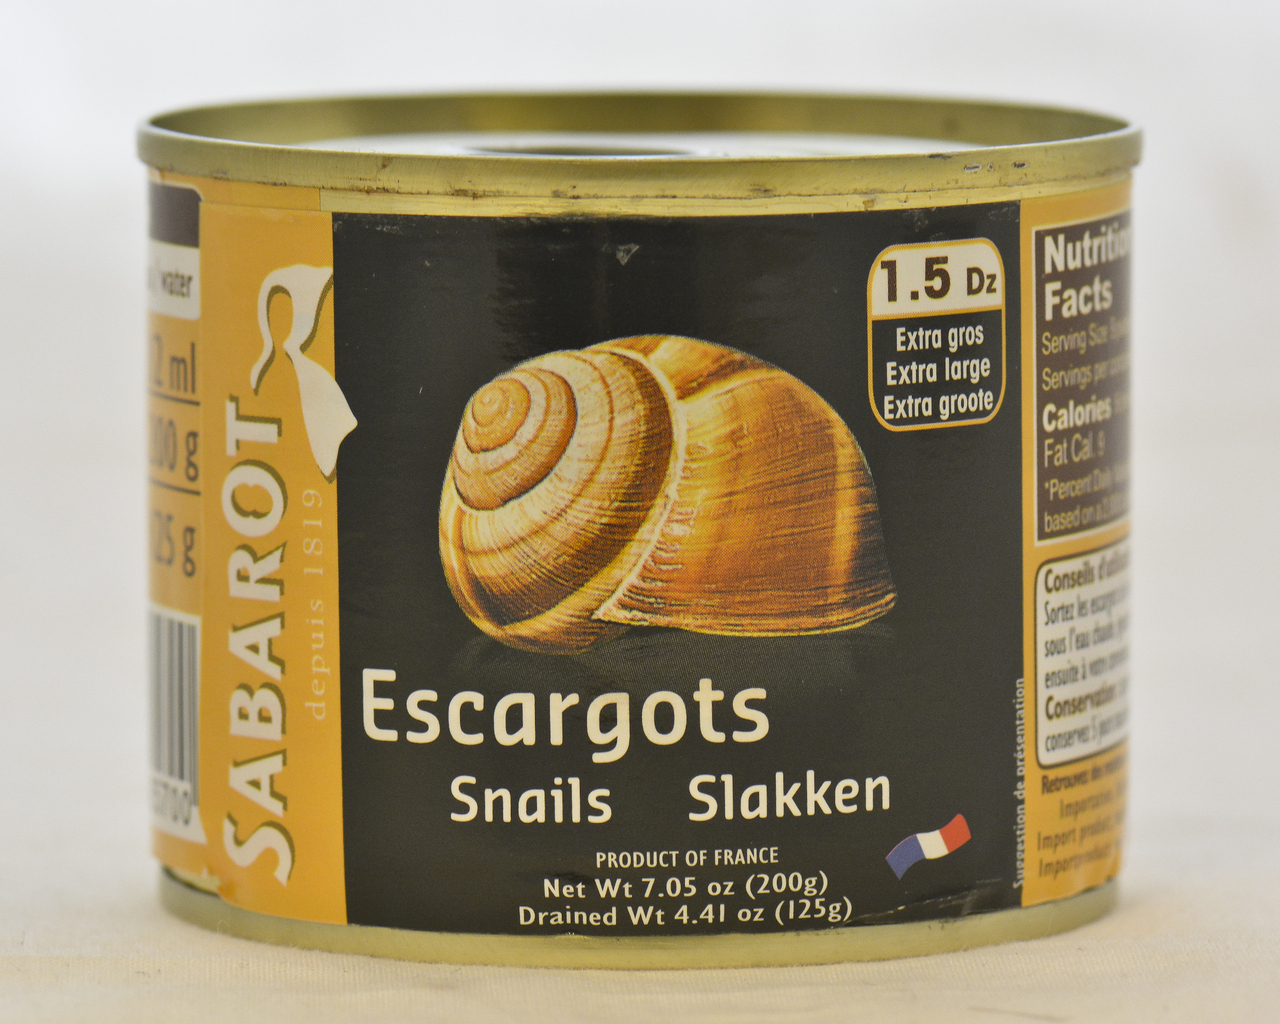 Escargots : How much do escargots cost? – Mon Panier Latin